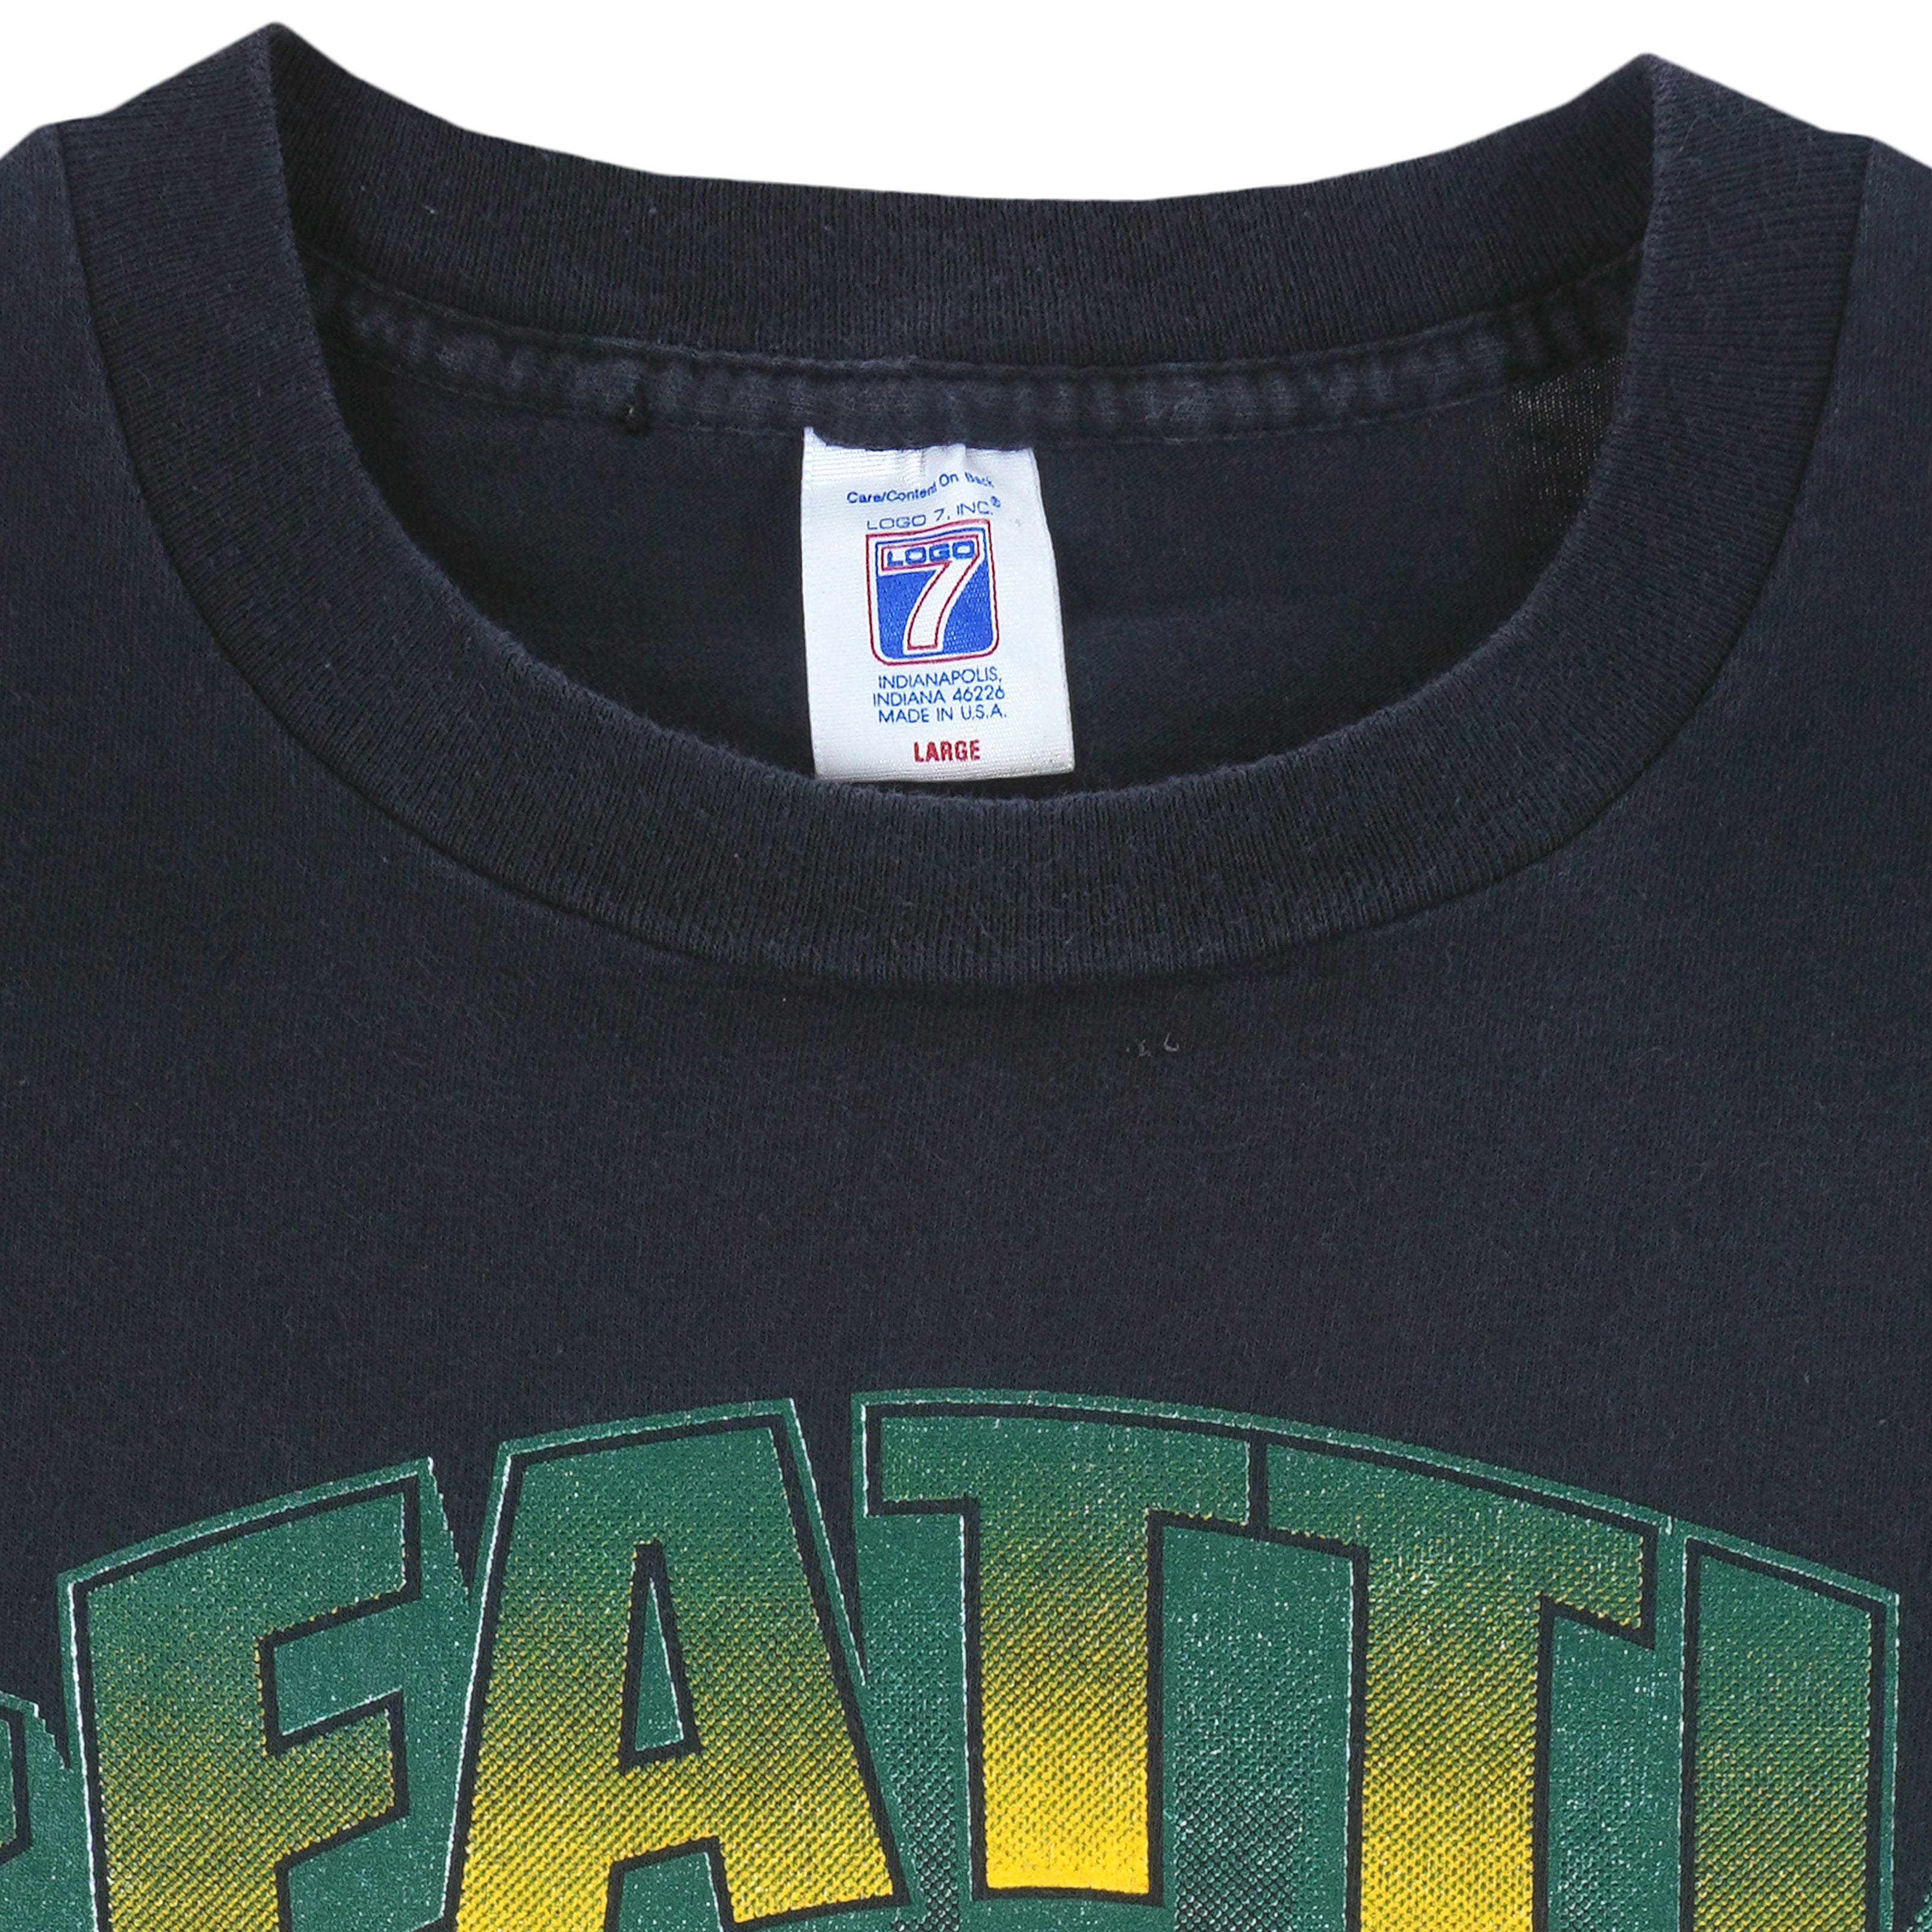 Seattle Supersonics Retro Basketball Logo T Shirt